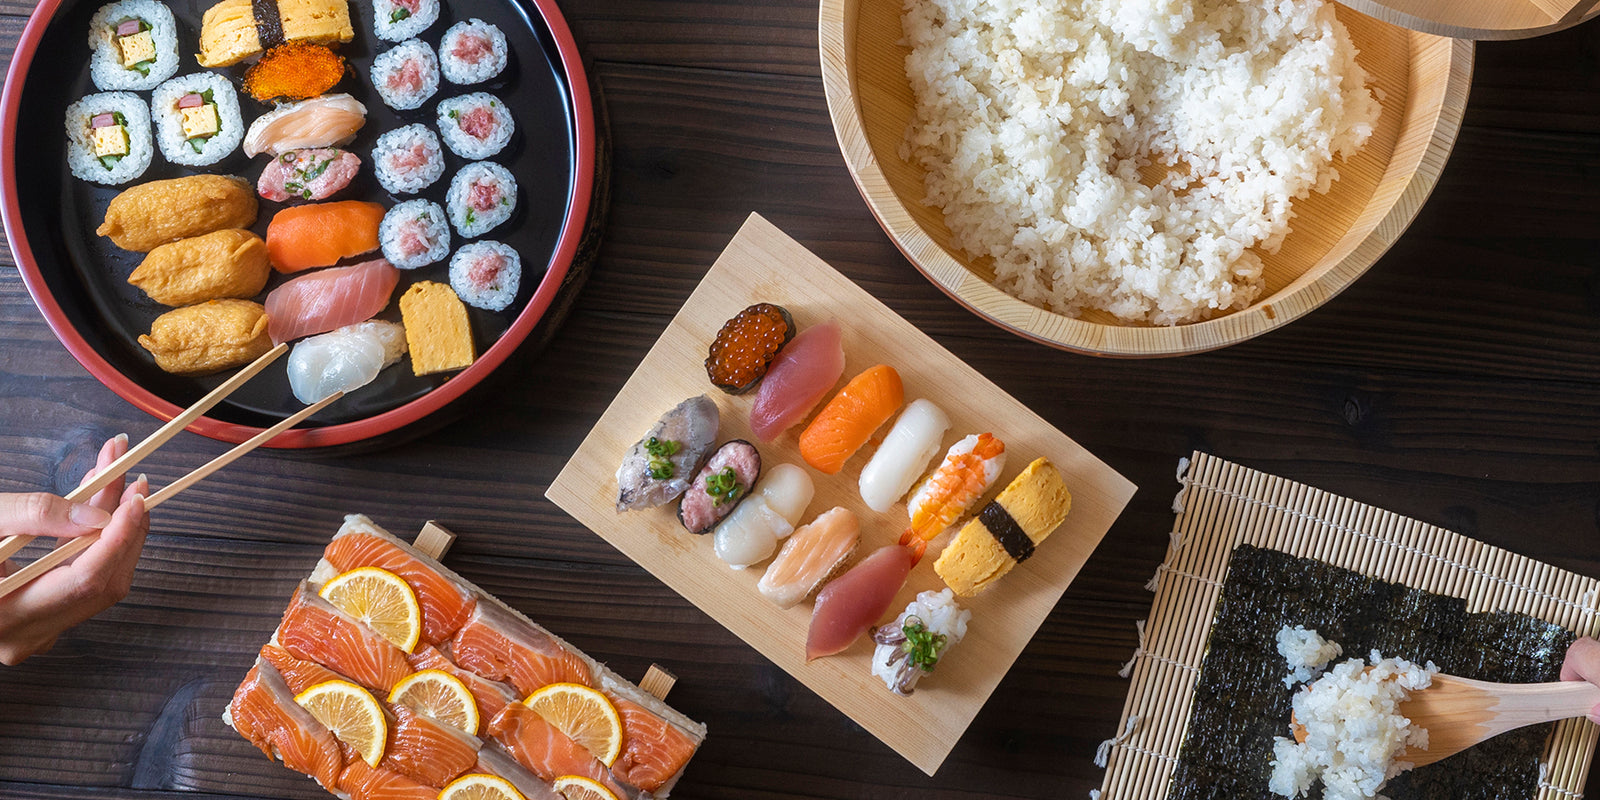 Cool Wares Sushi Making Tool Set  Makes Sushi Rolls Fun and Easy – Real  Wasabi